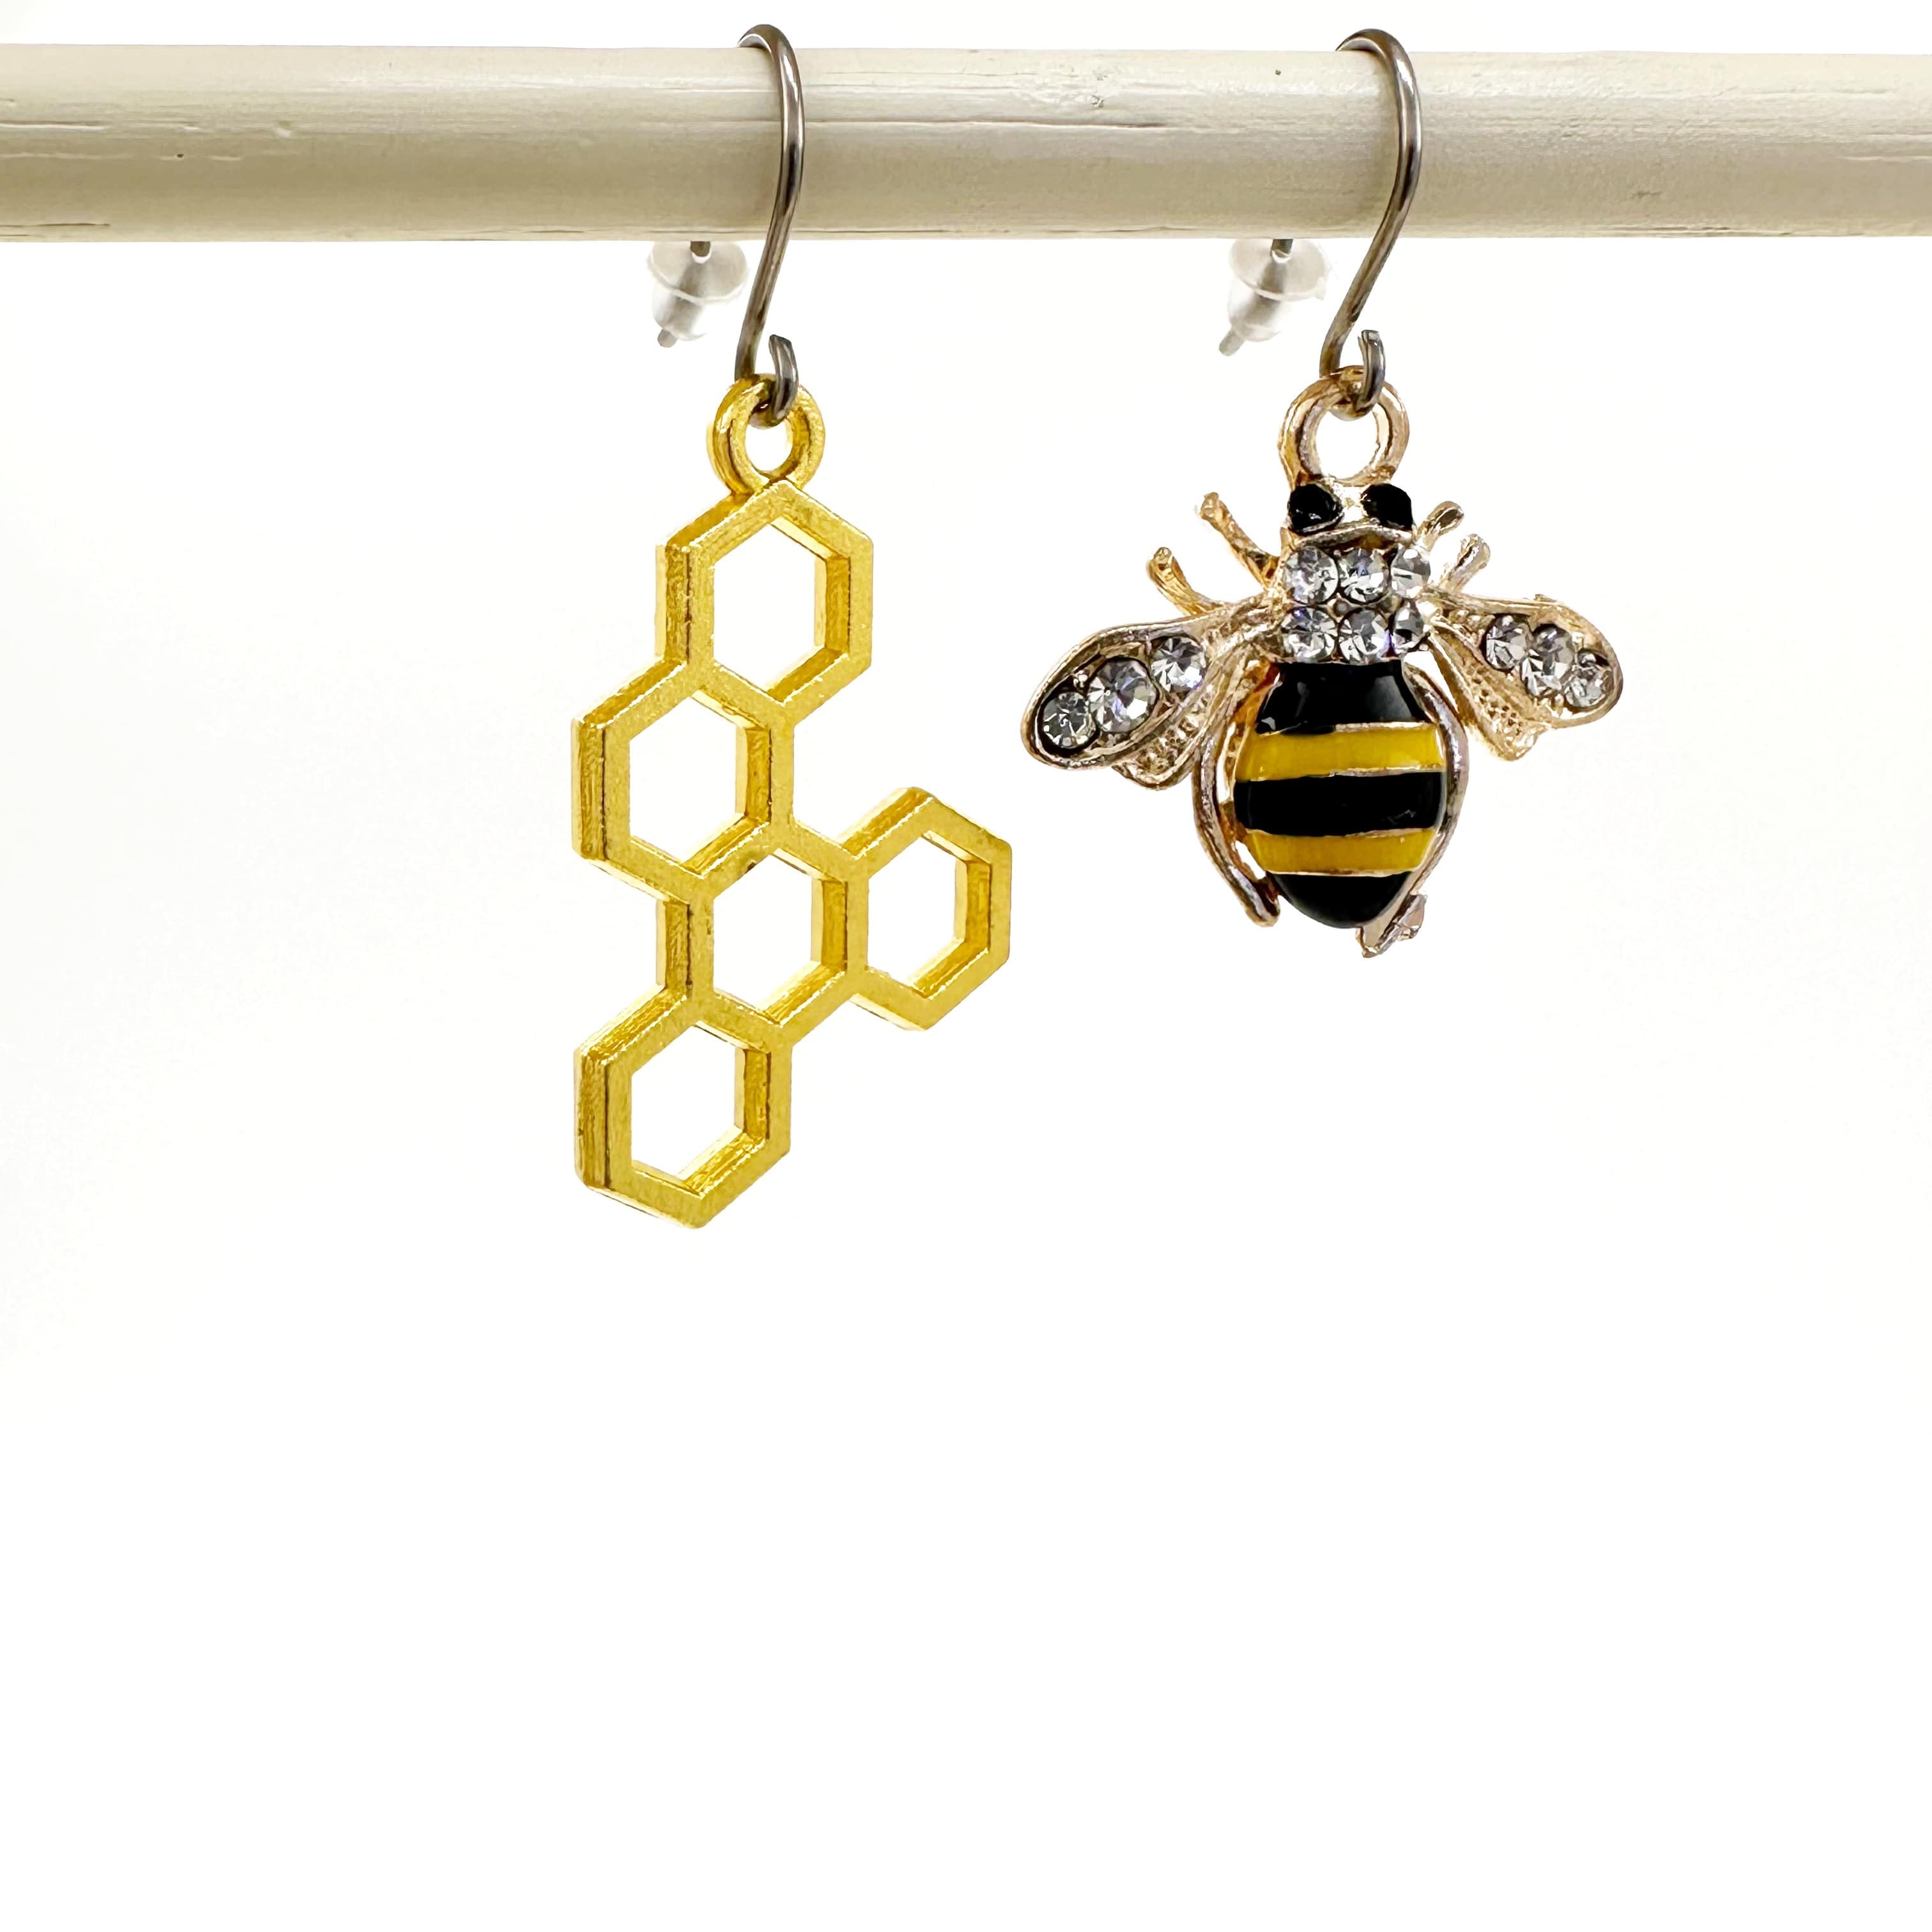 Bee and honeycomb earrings